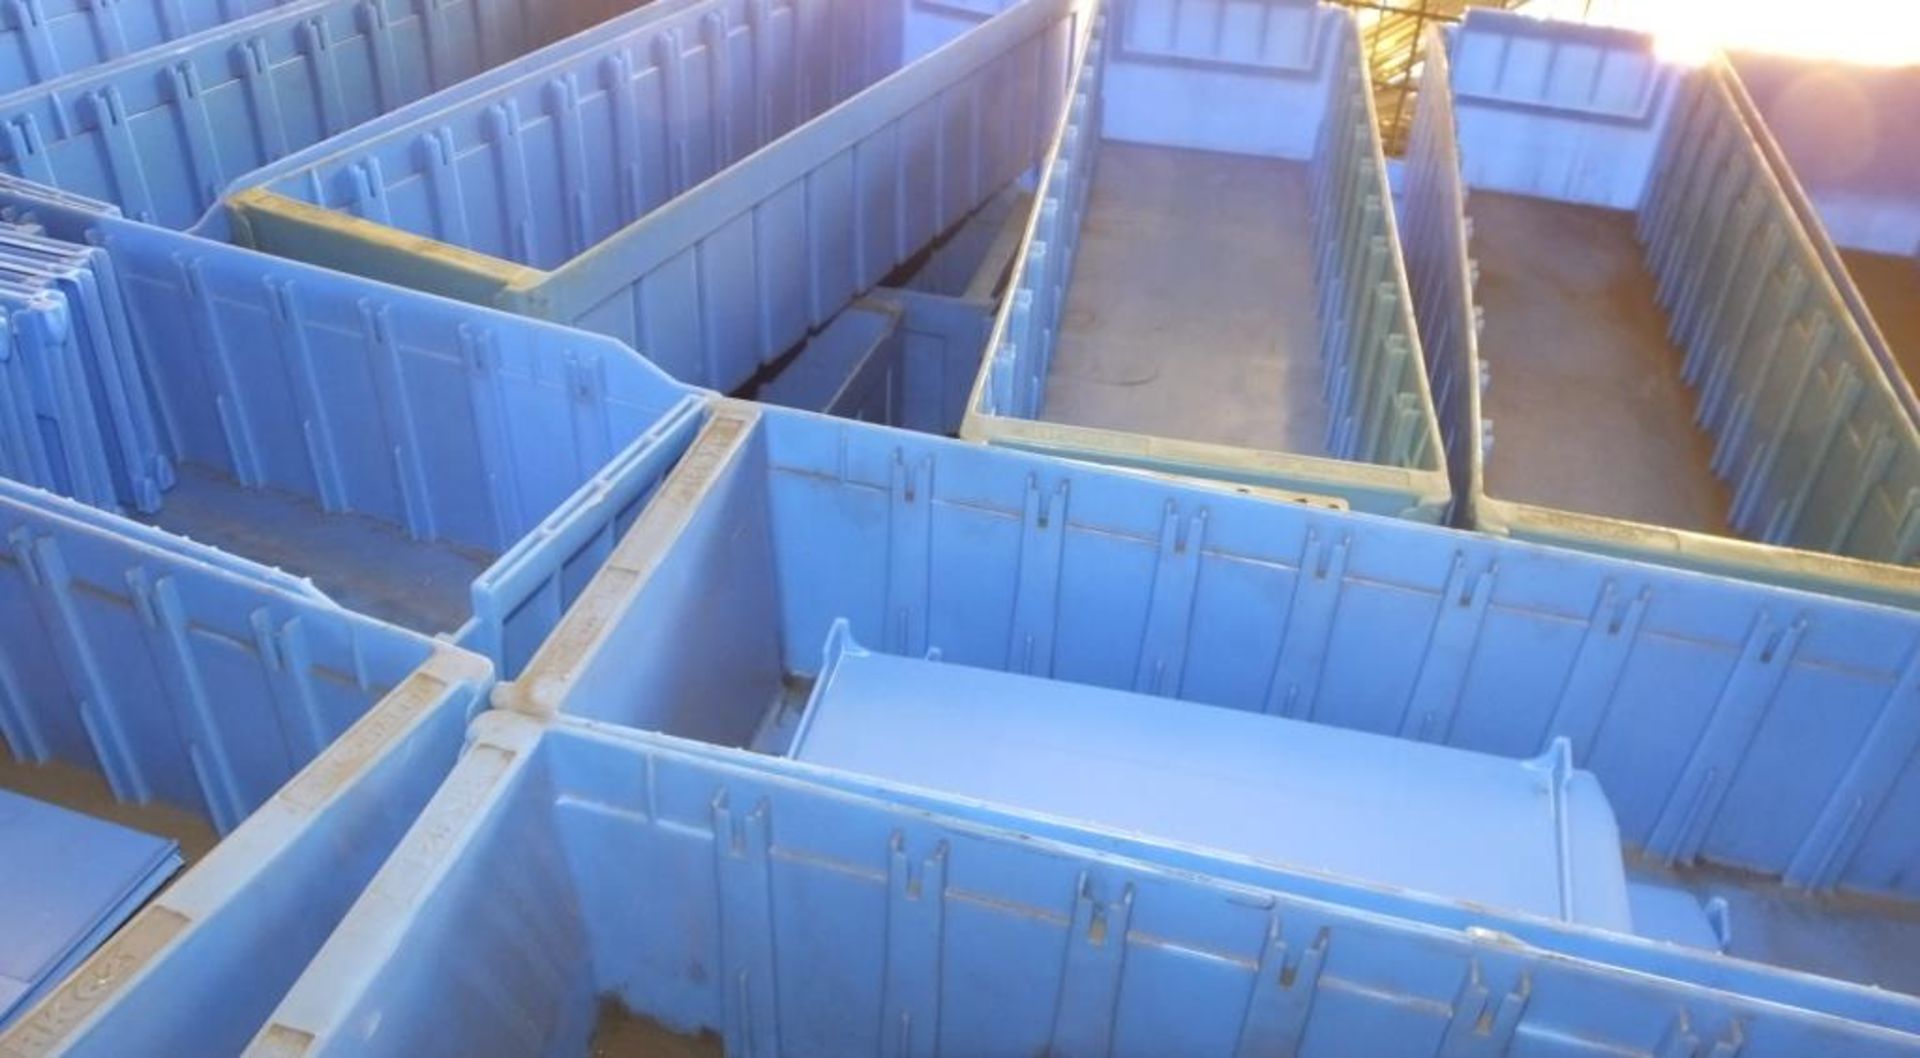 96x Blue Plastic storage bins - Image 2 of 2